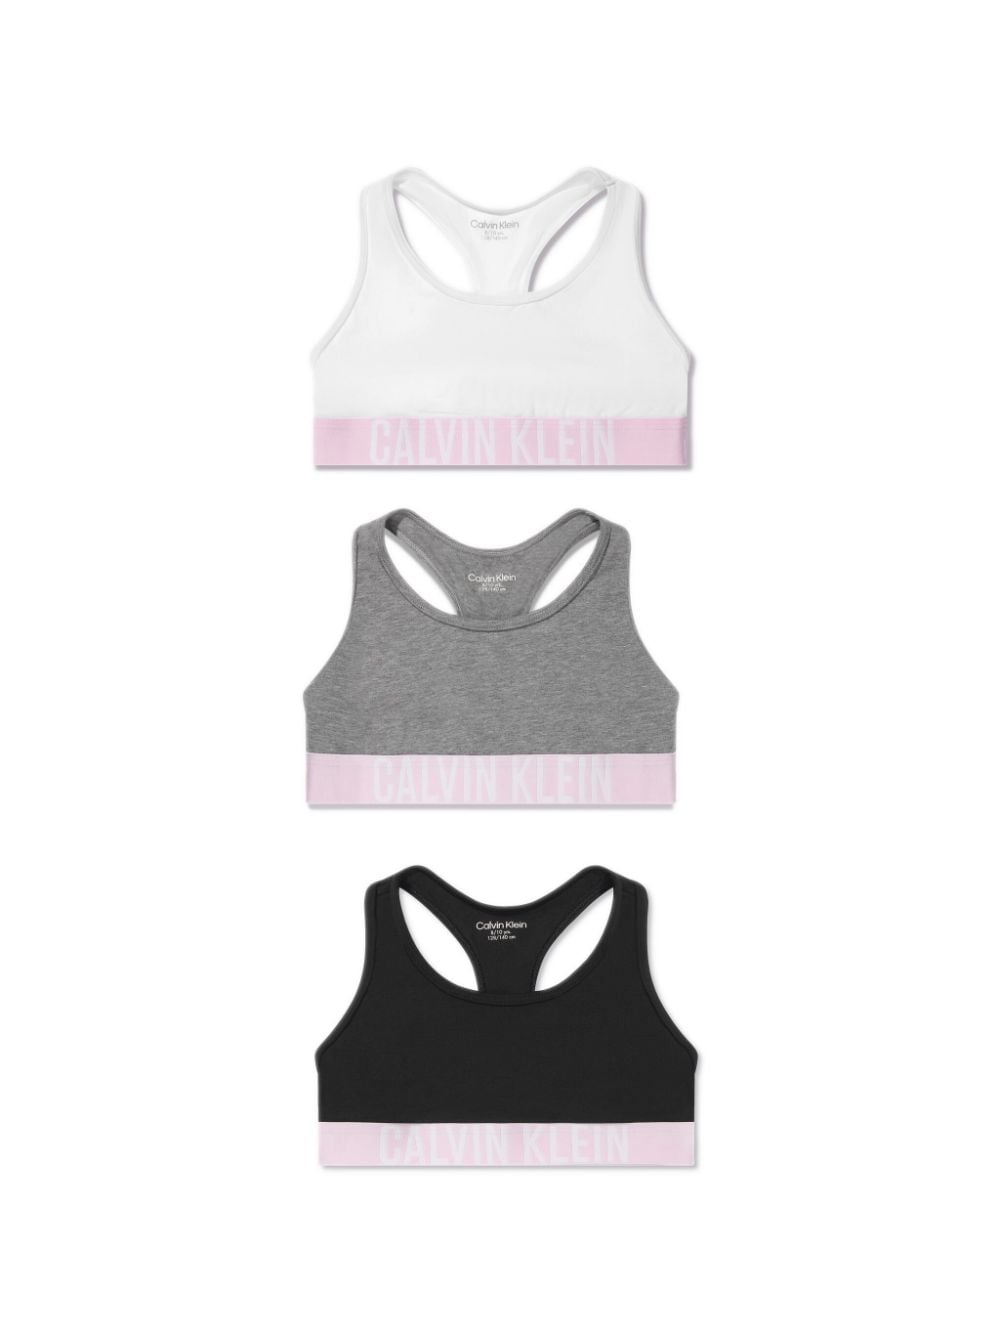 Image 1 of Calvin Klein Kids logo band sports bra (pack of three)